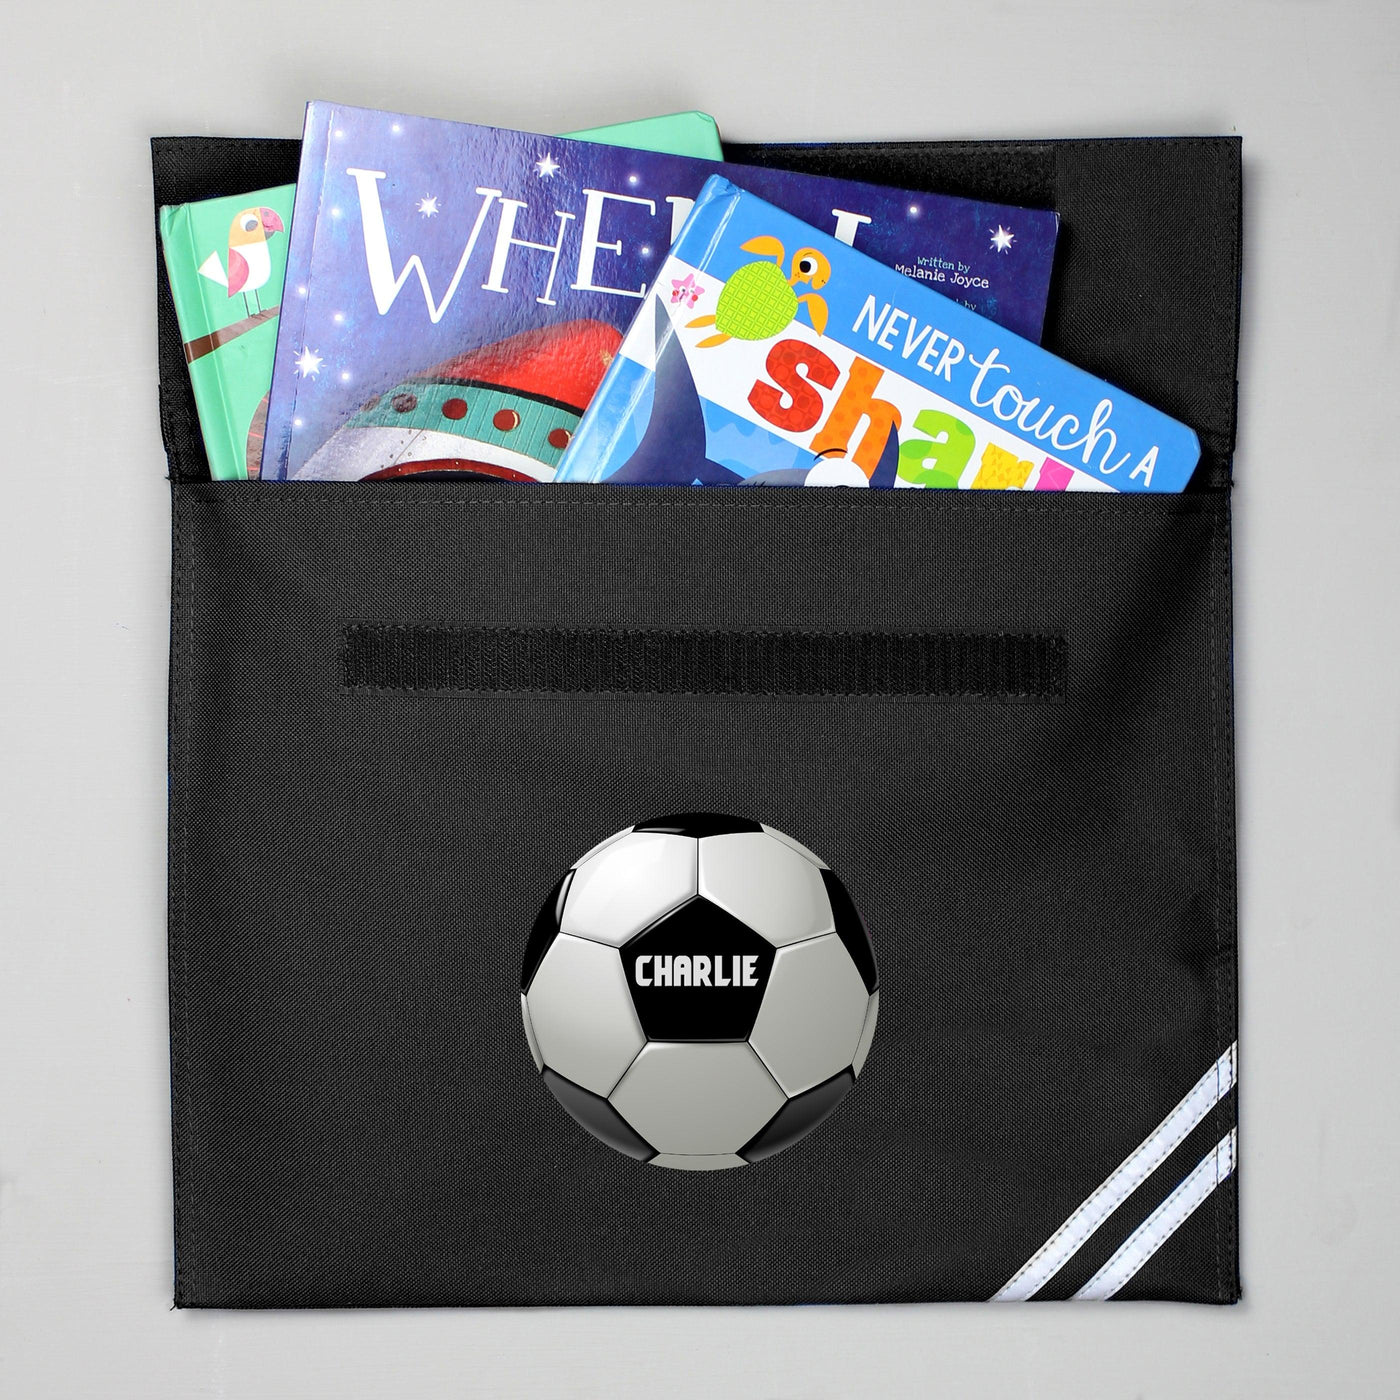 Personalised Football Black Book Bag - Shop Personalised Gifts